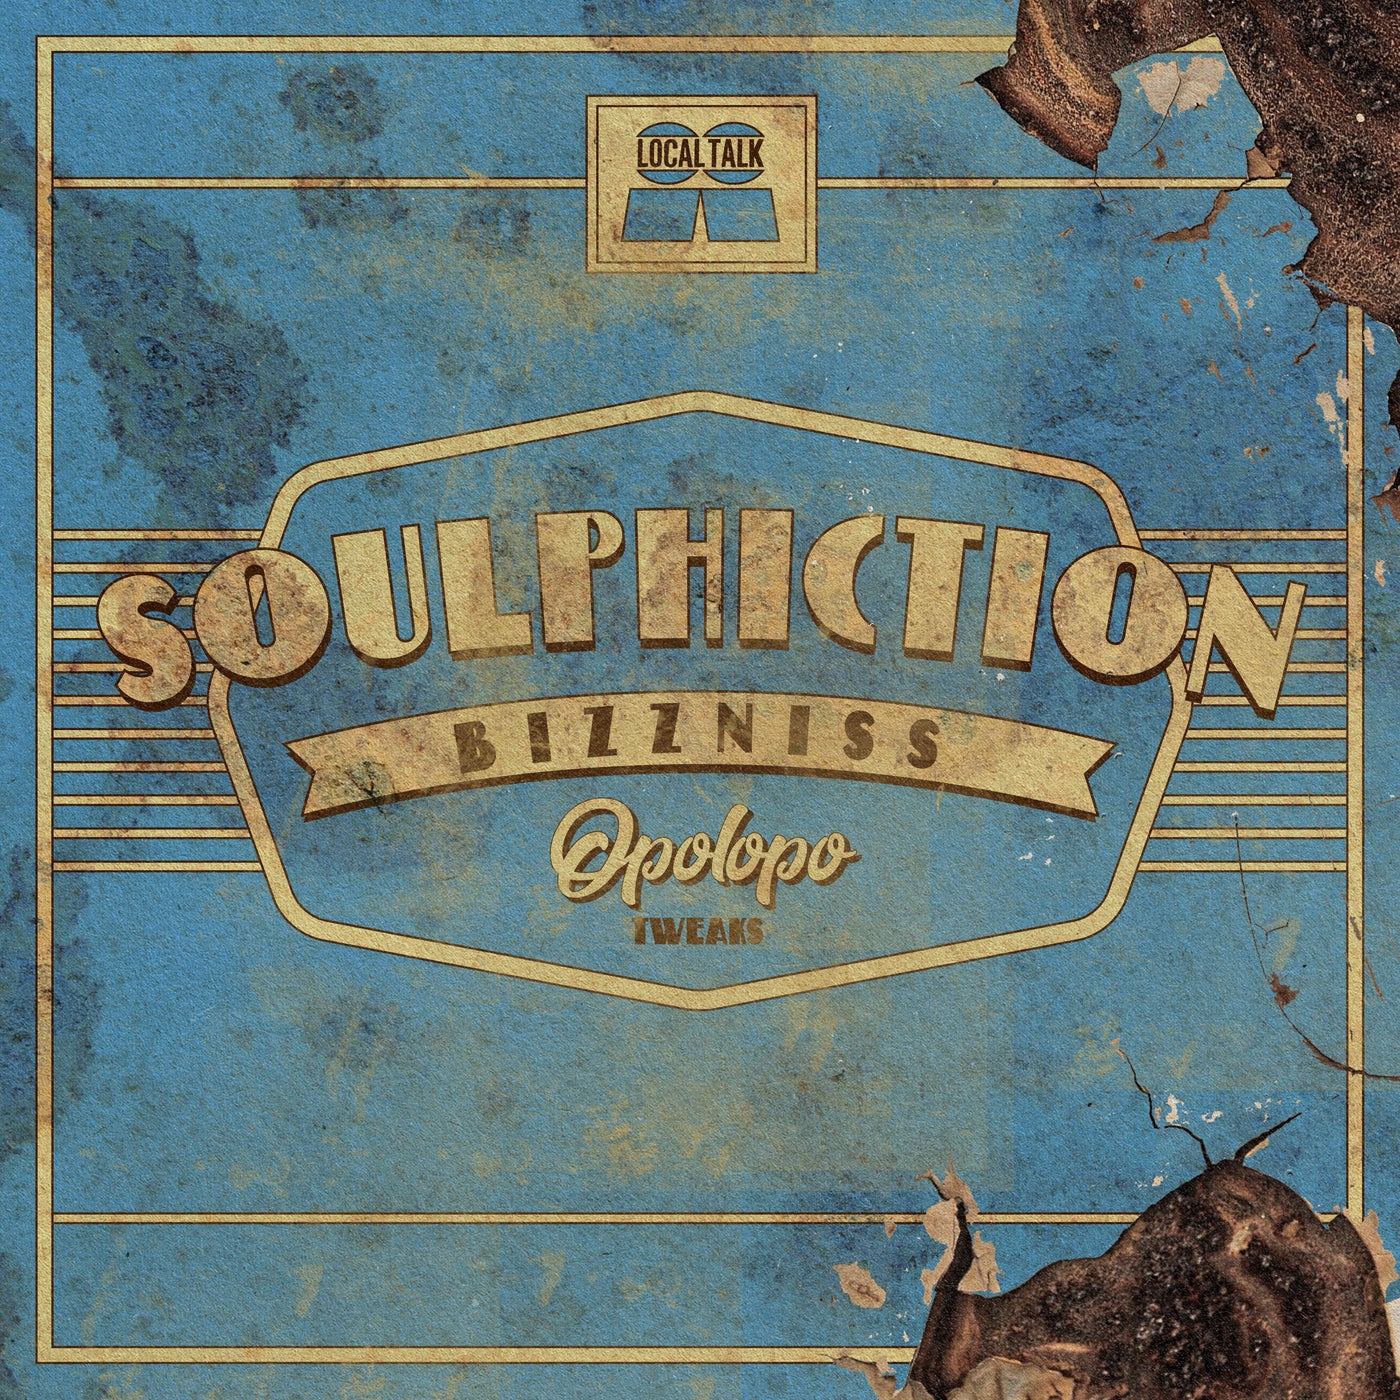 image cover: Soulphiction - Bizzness (OPOLOPO Tweak) / OTW2